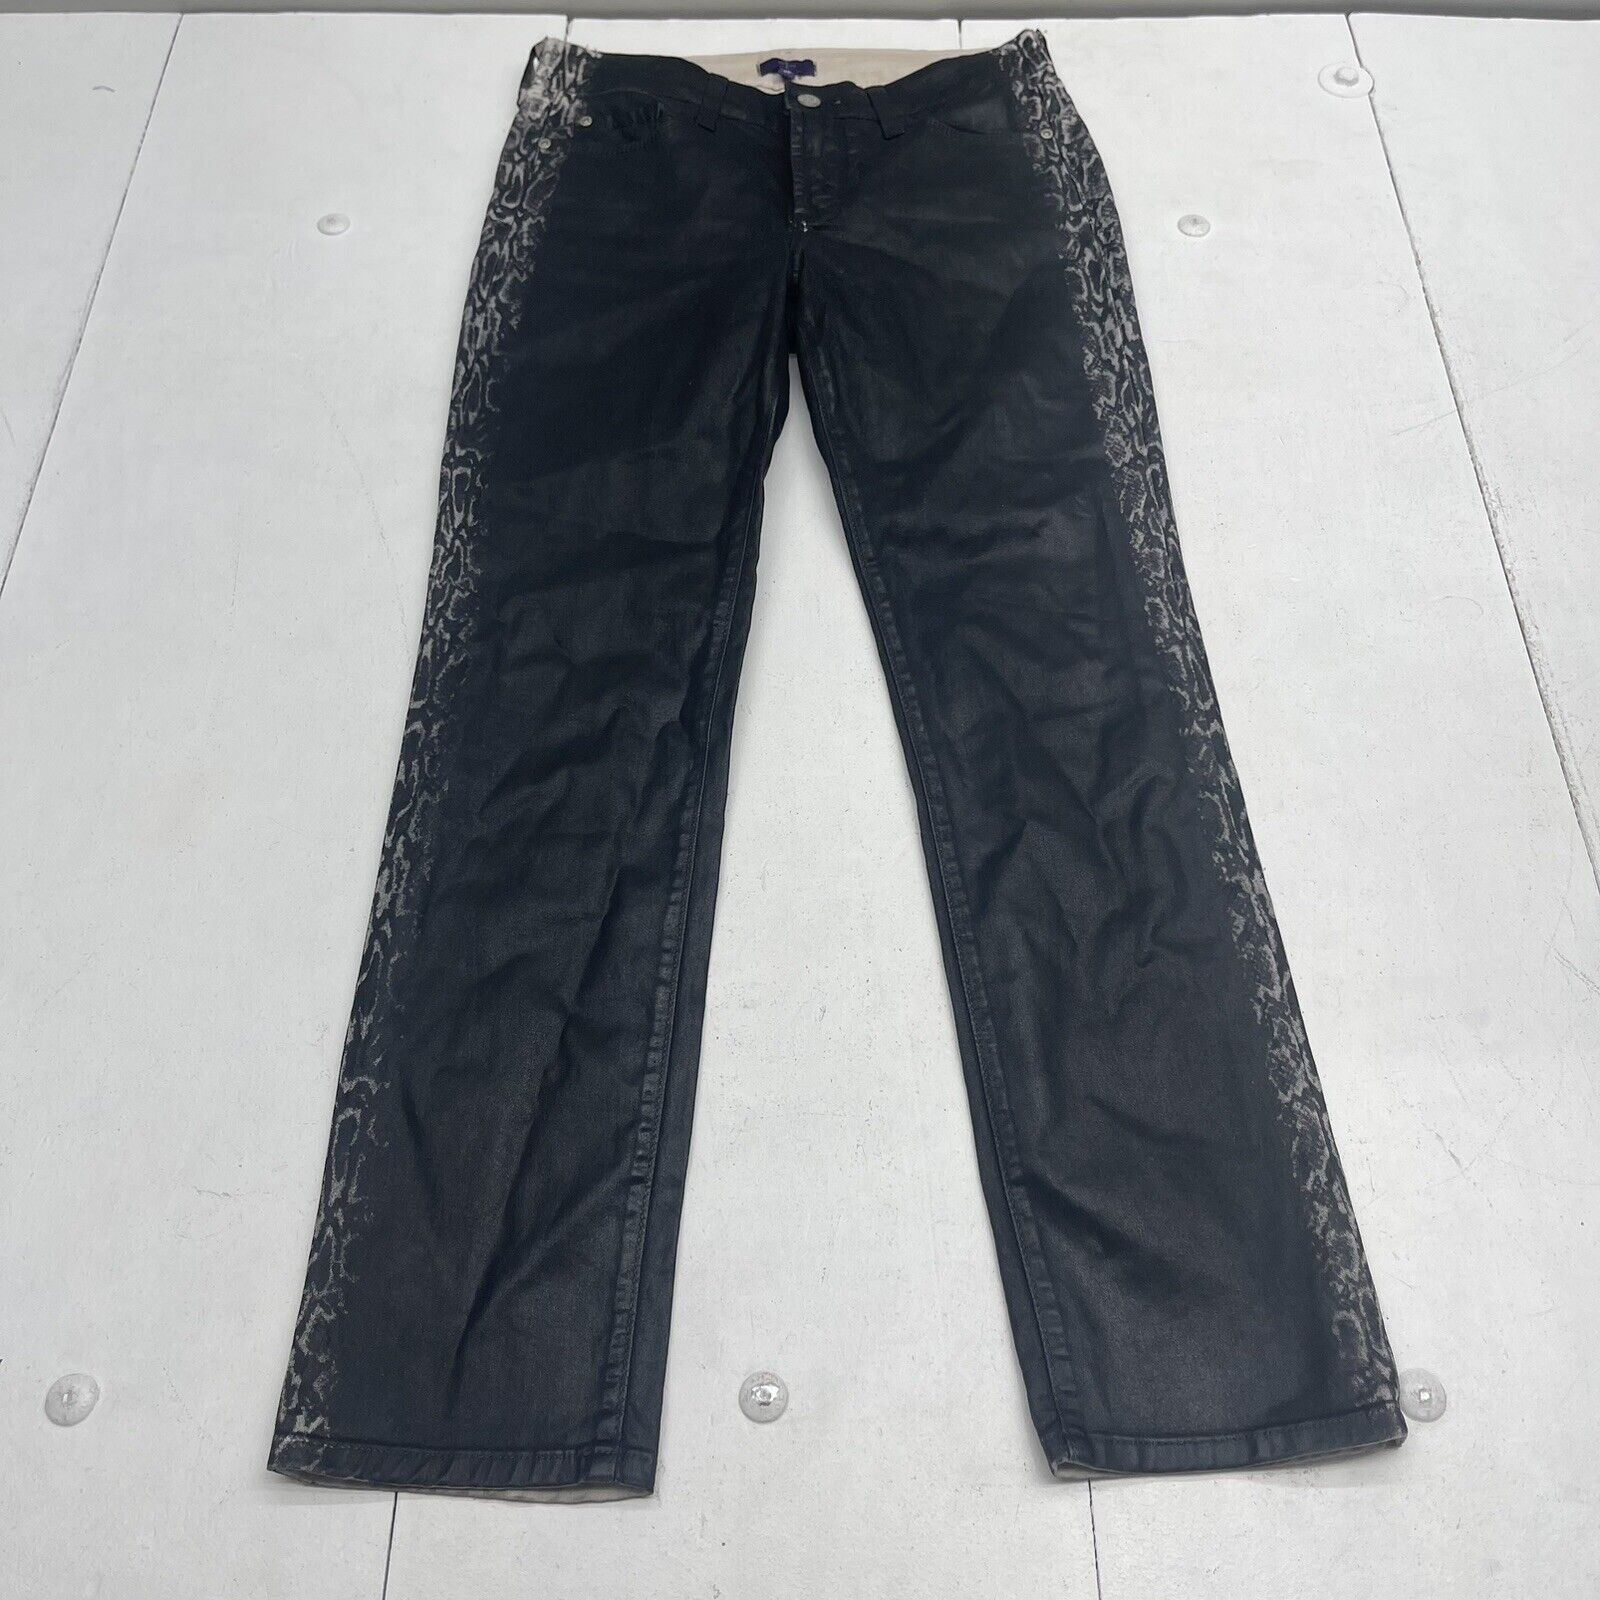 NYDJ Sherri Black Faux Leather Coated Skinny Jeans Women’s Petite 4